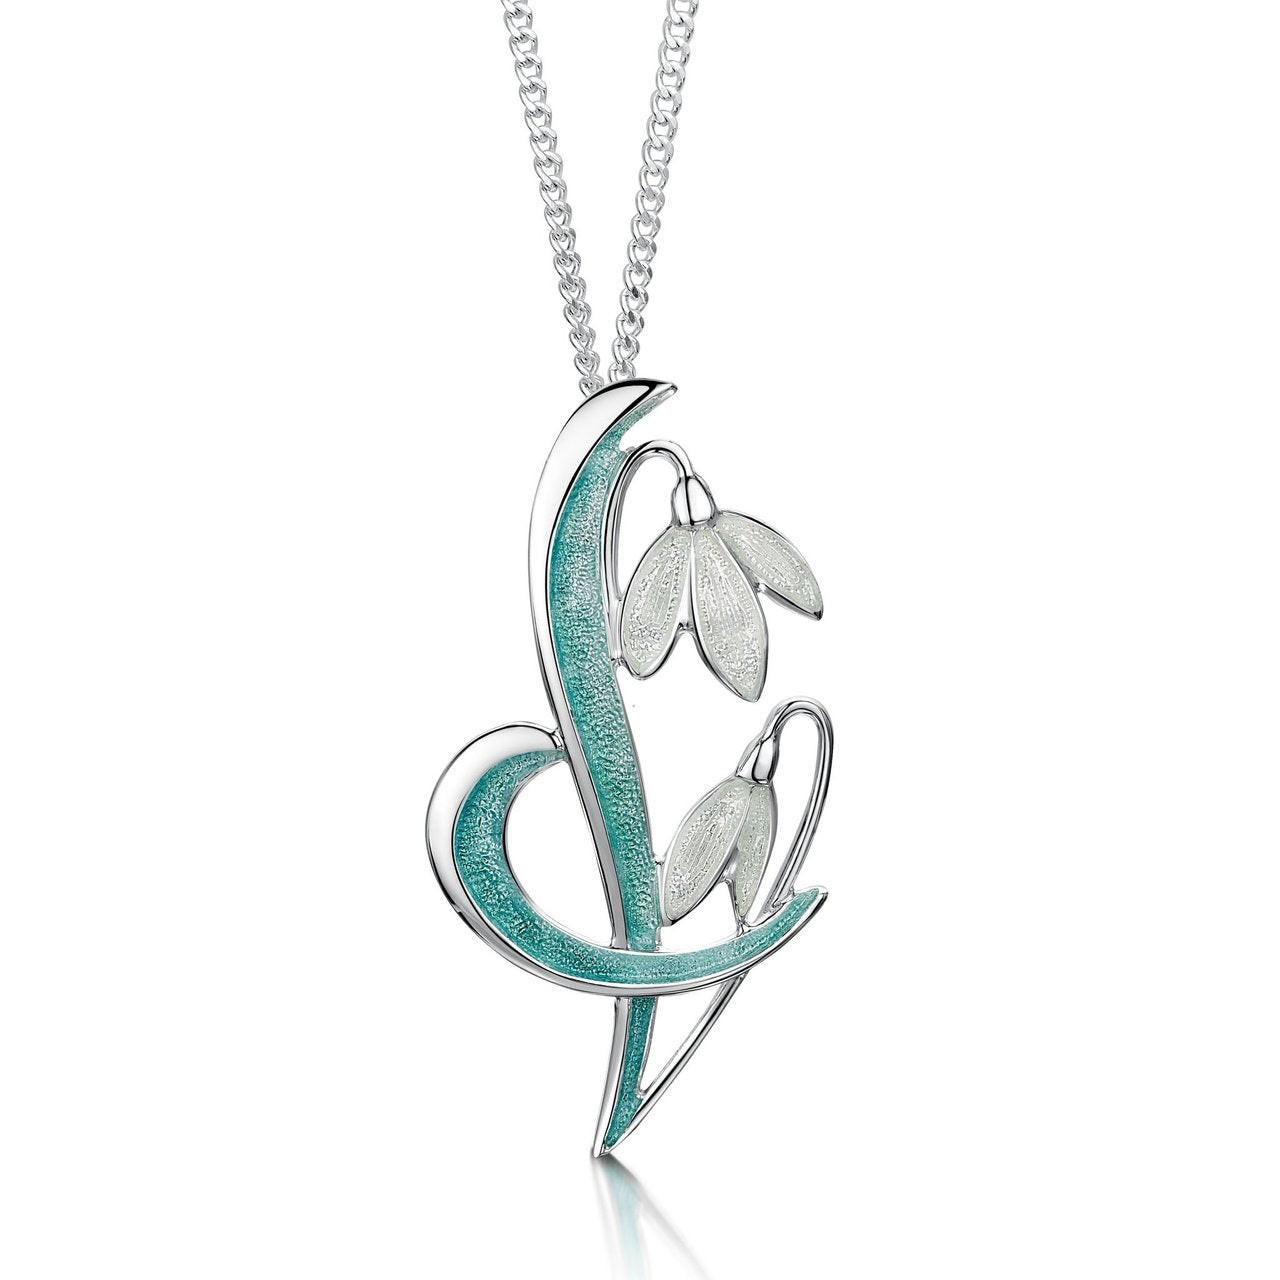 Snowdrop Sterling Silver Pendant Necklace in Leaf Enamel